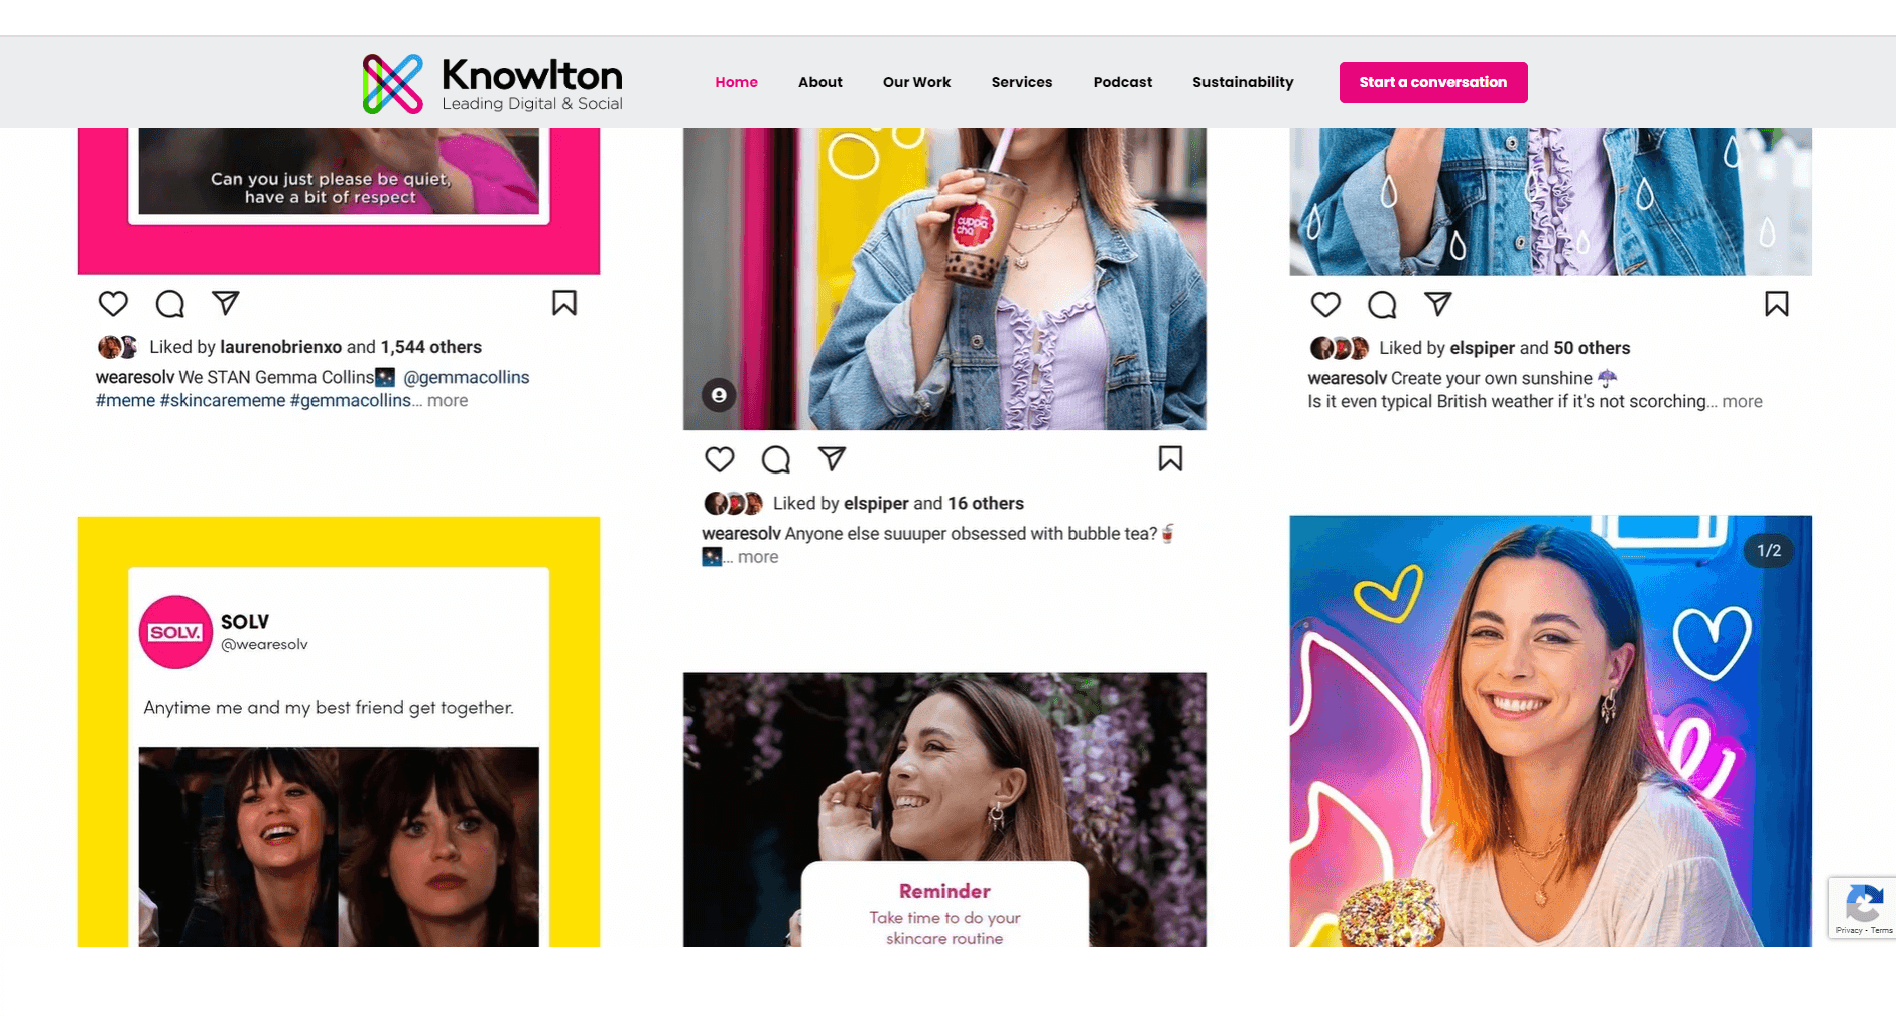 Knowlton Video Marketing Agency